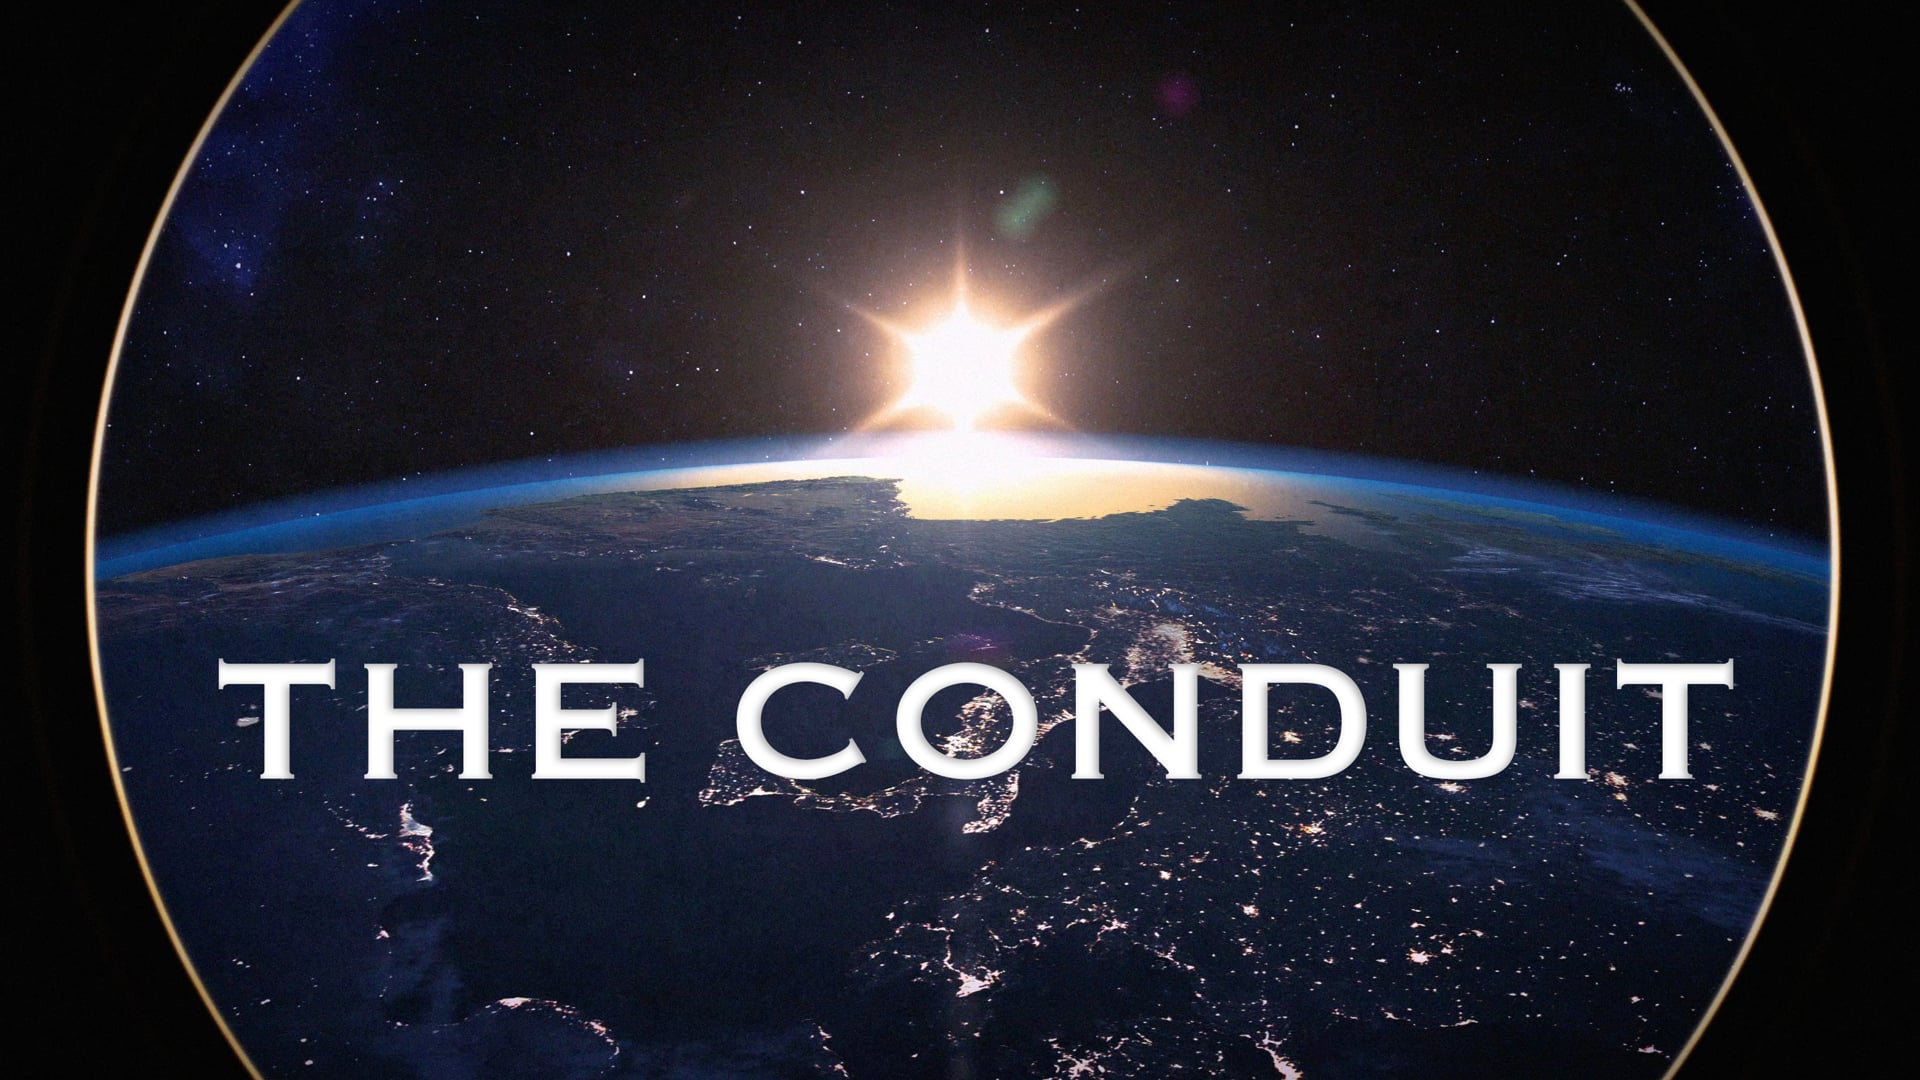 The Conduit